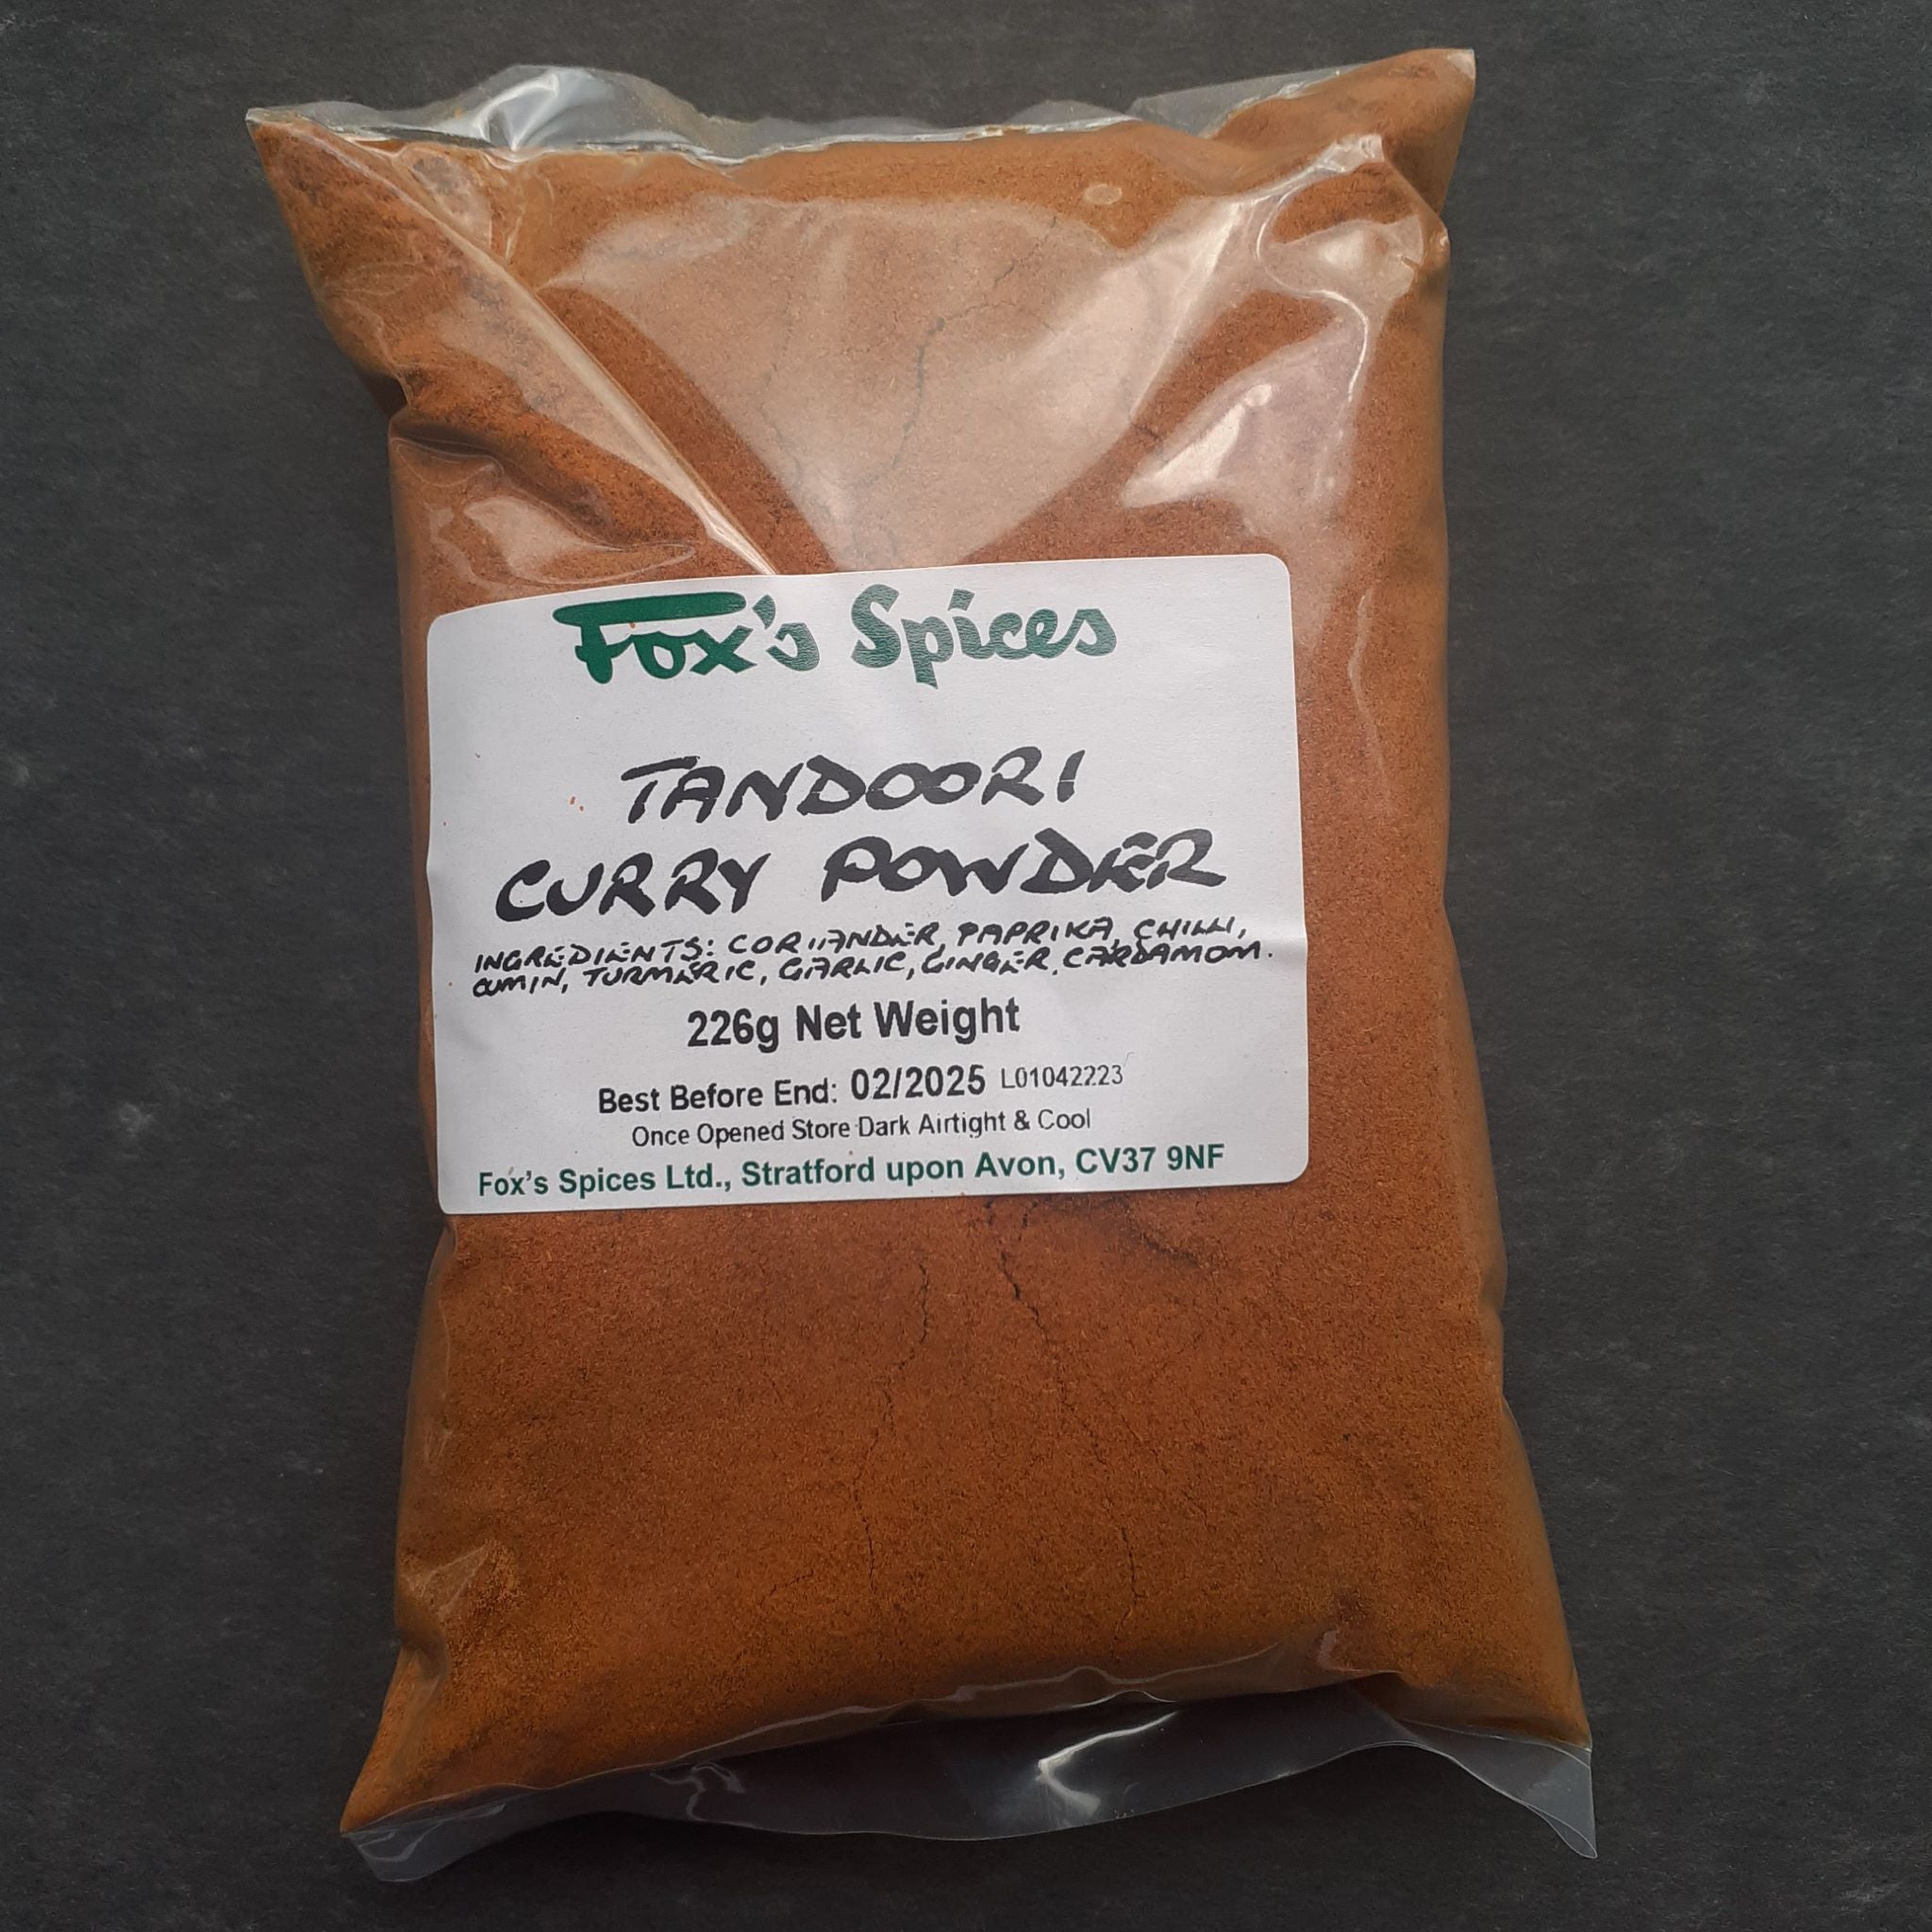 Fox's Spices Tandoori curry powder supplied this 226g bags.